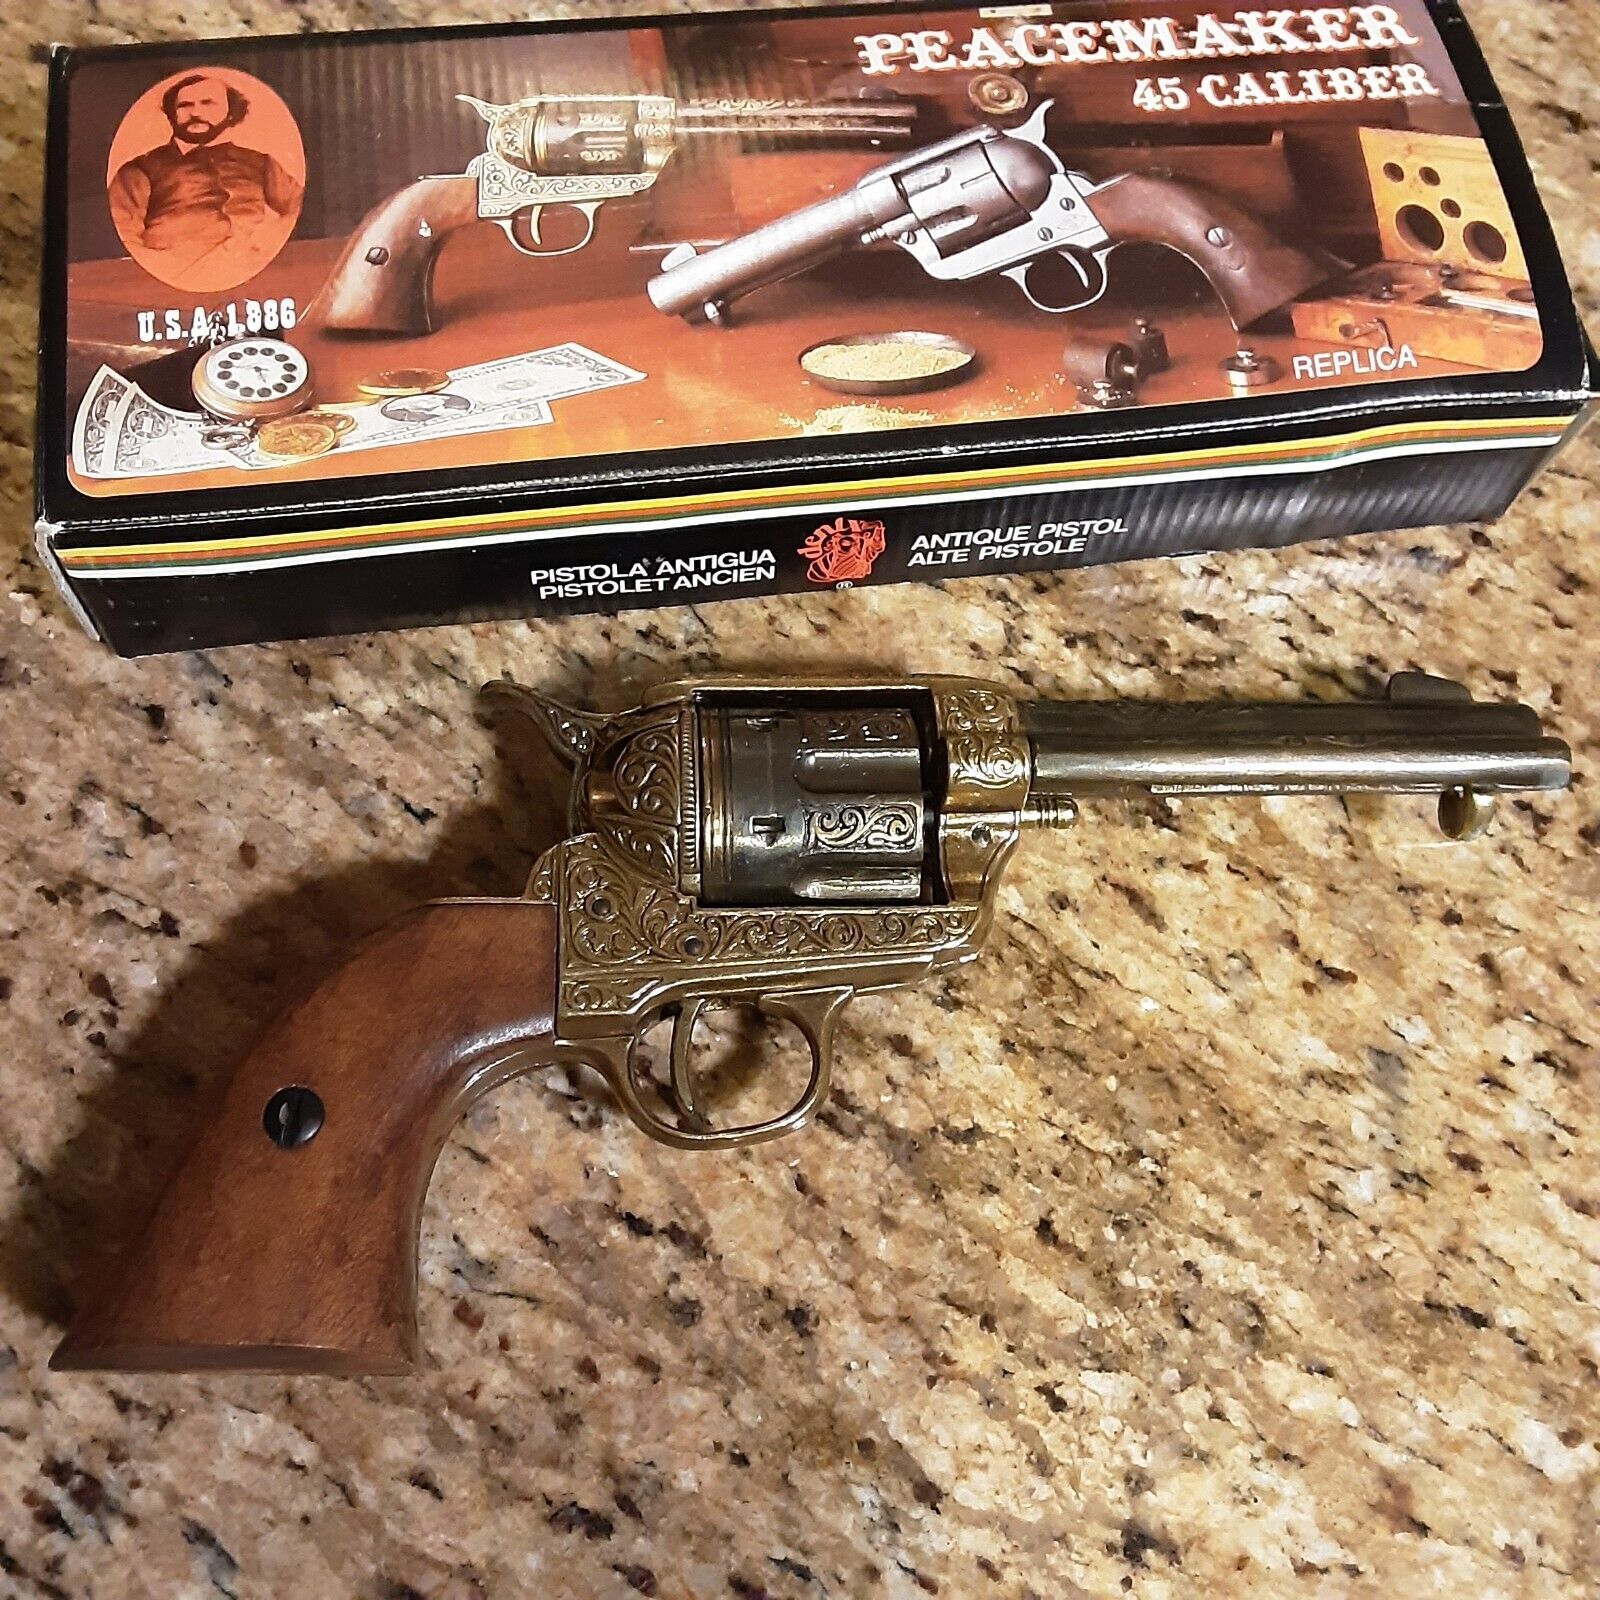 Vintage/Antique 1886 Peacemaker Replica Gun 45 Caliber Pistol